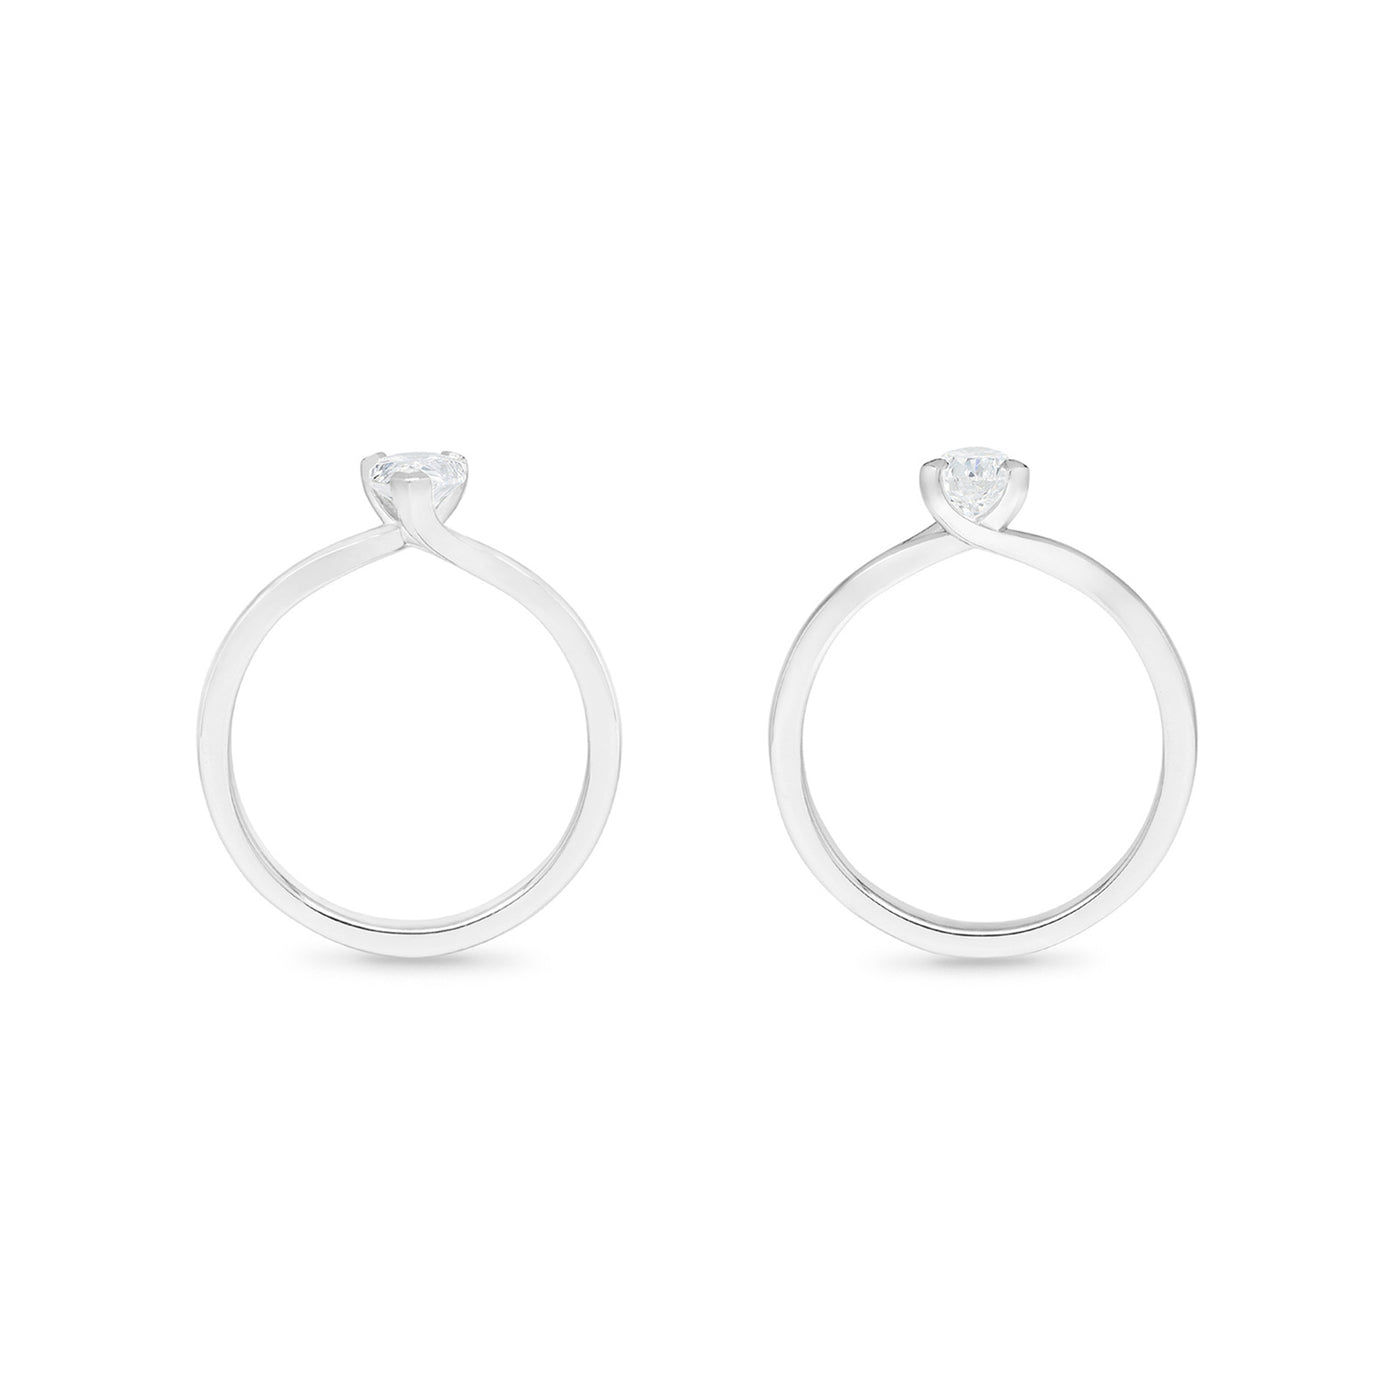 Silhouette: Pear Cut Diamond Solitaire Ring